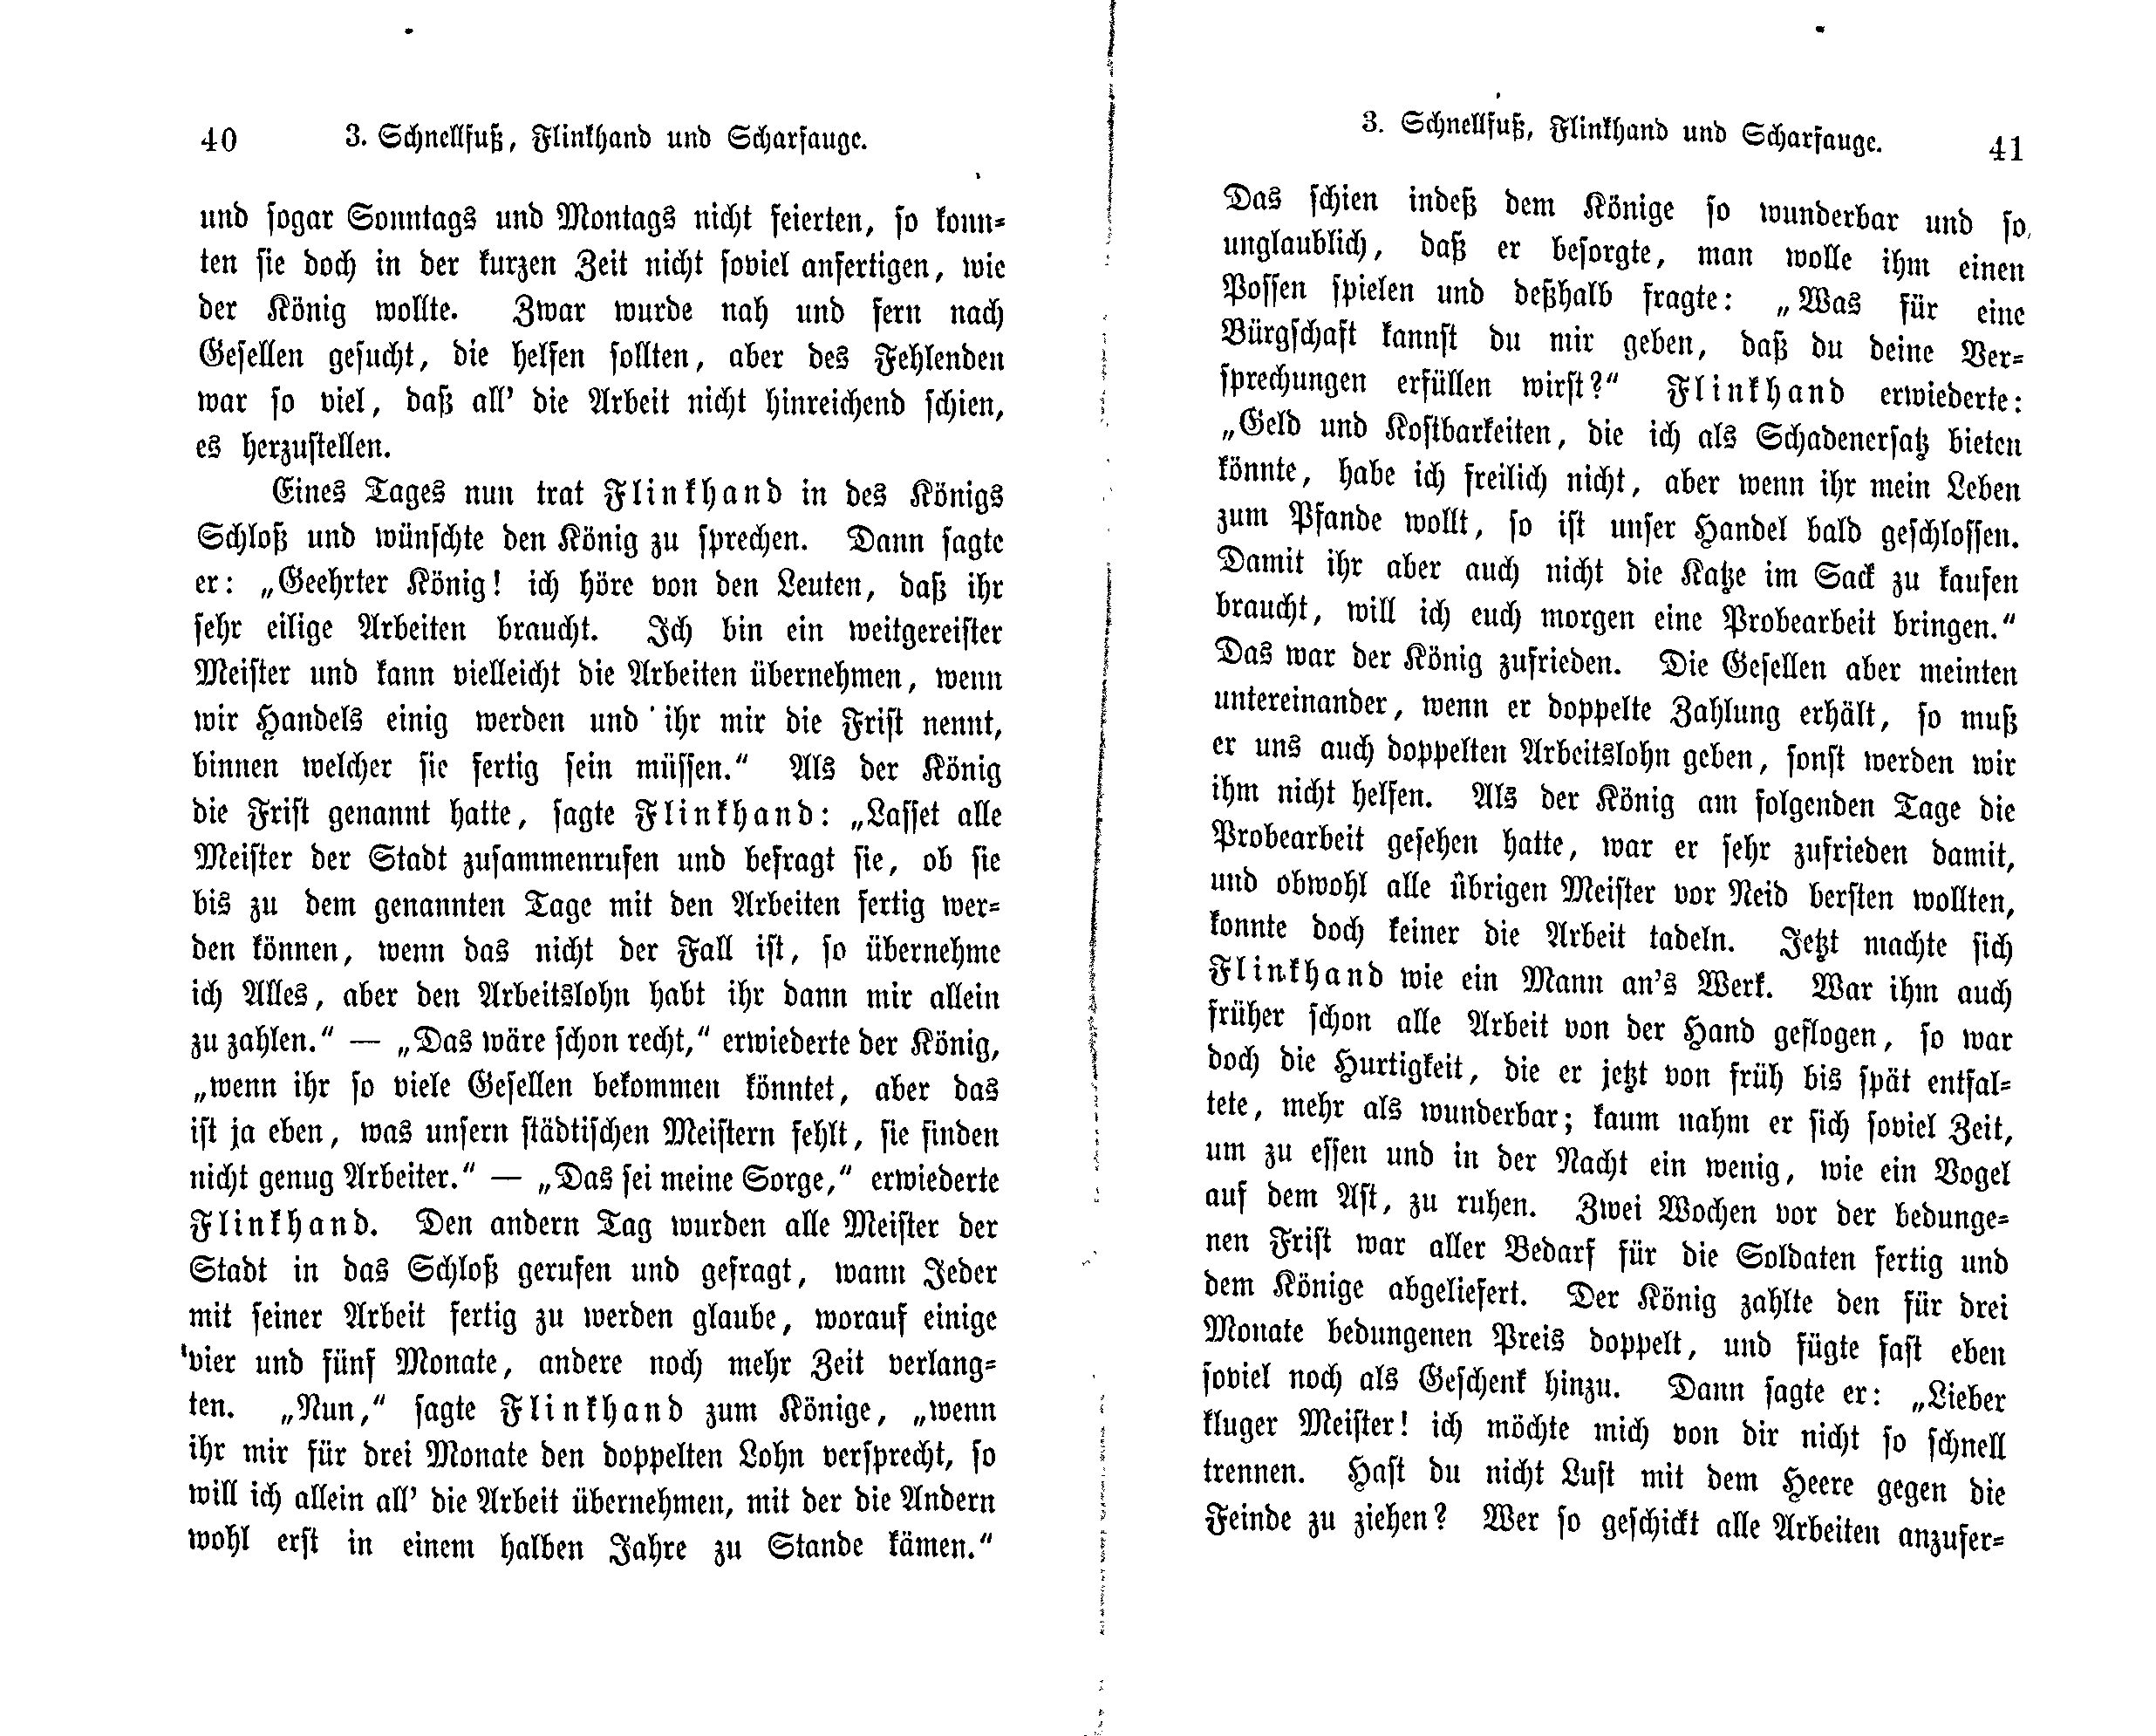 Estnische Märchen [1] (1869) | 25. (40-41) Main body of text